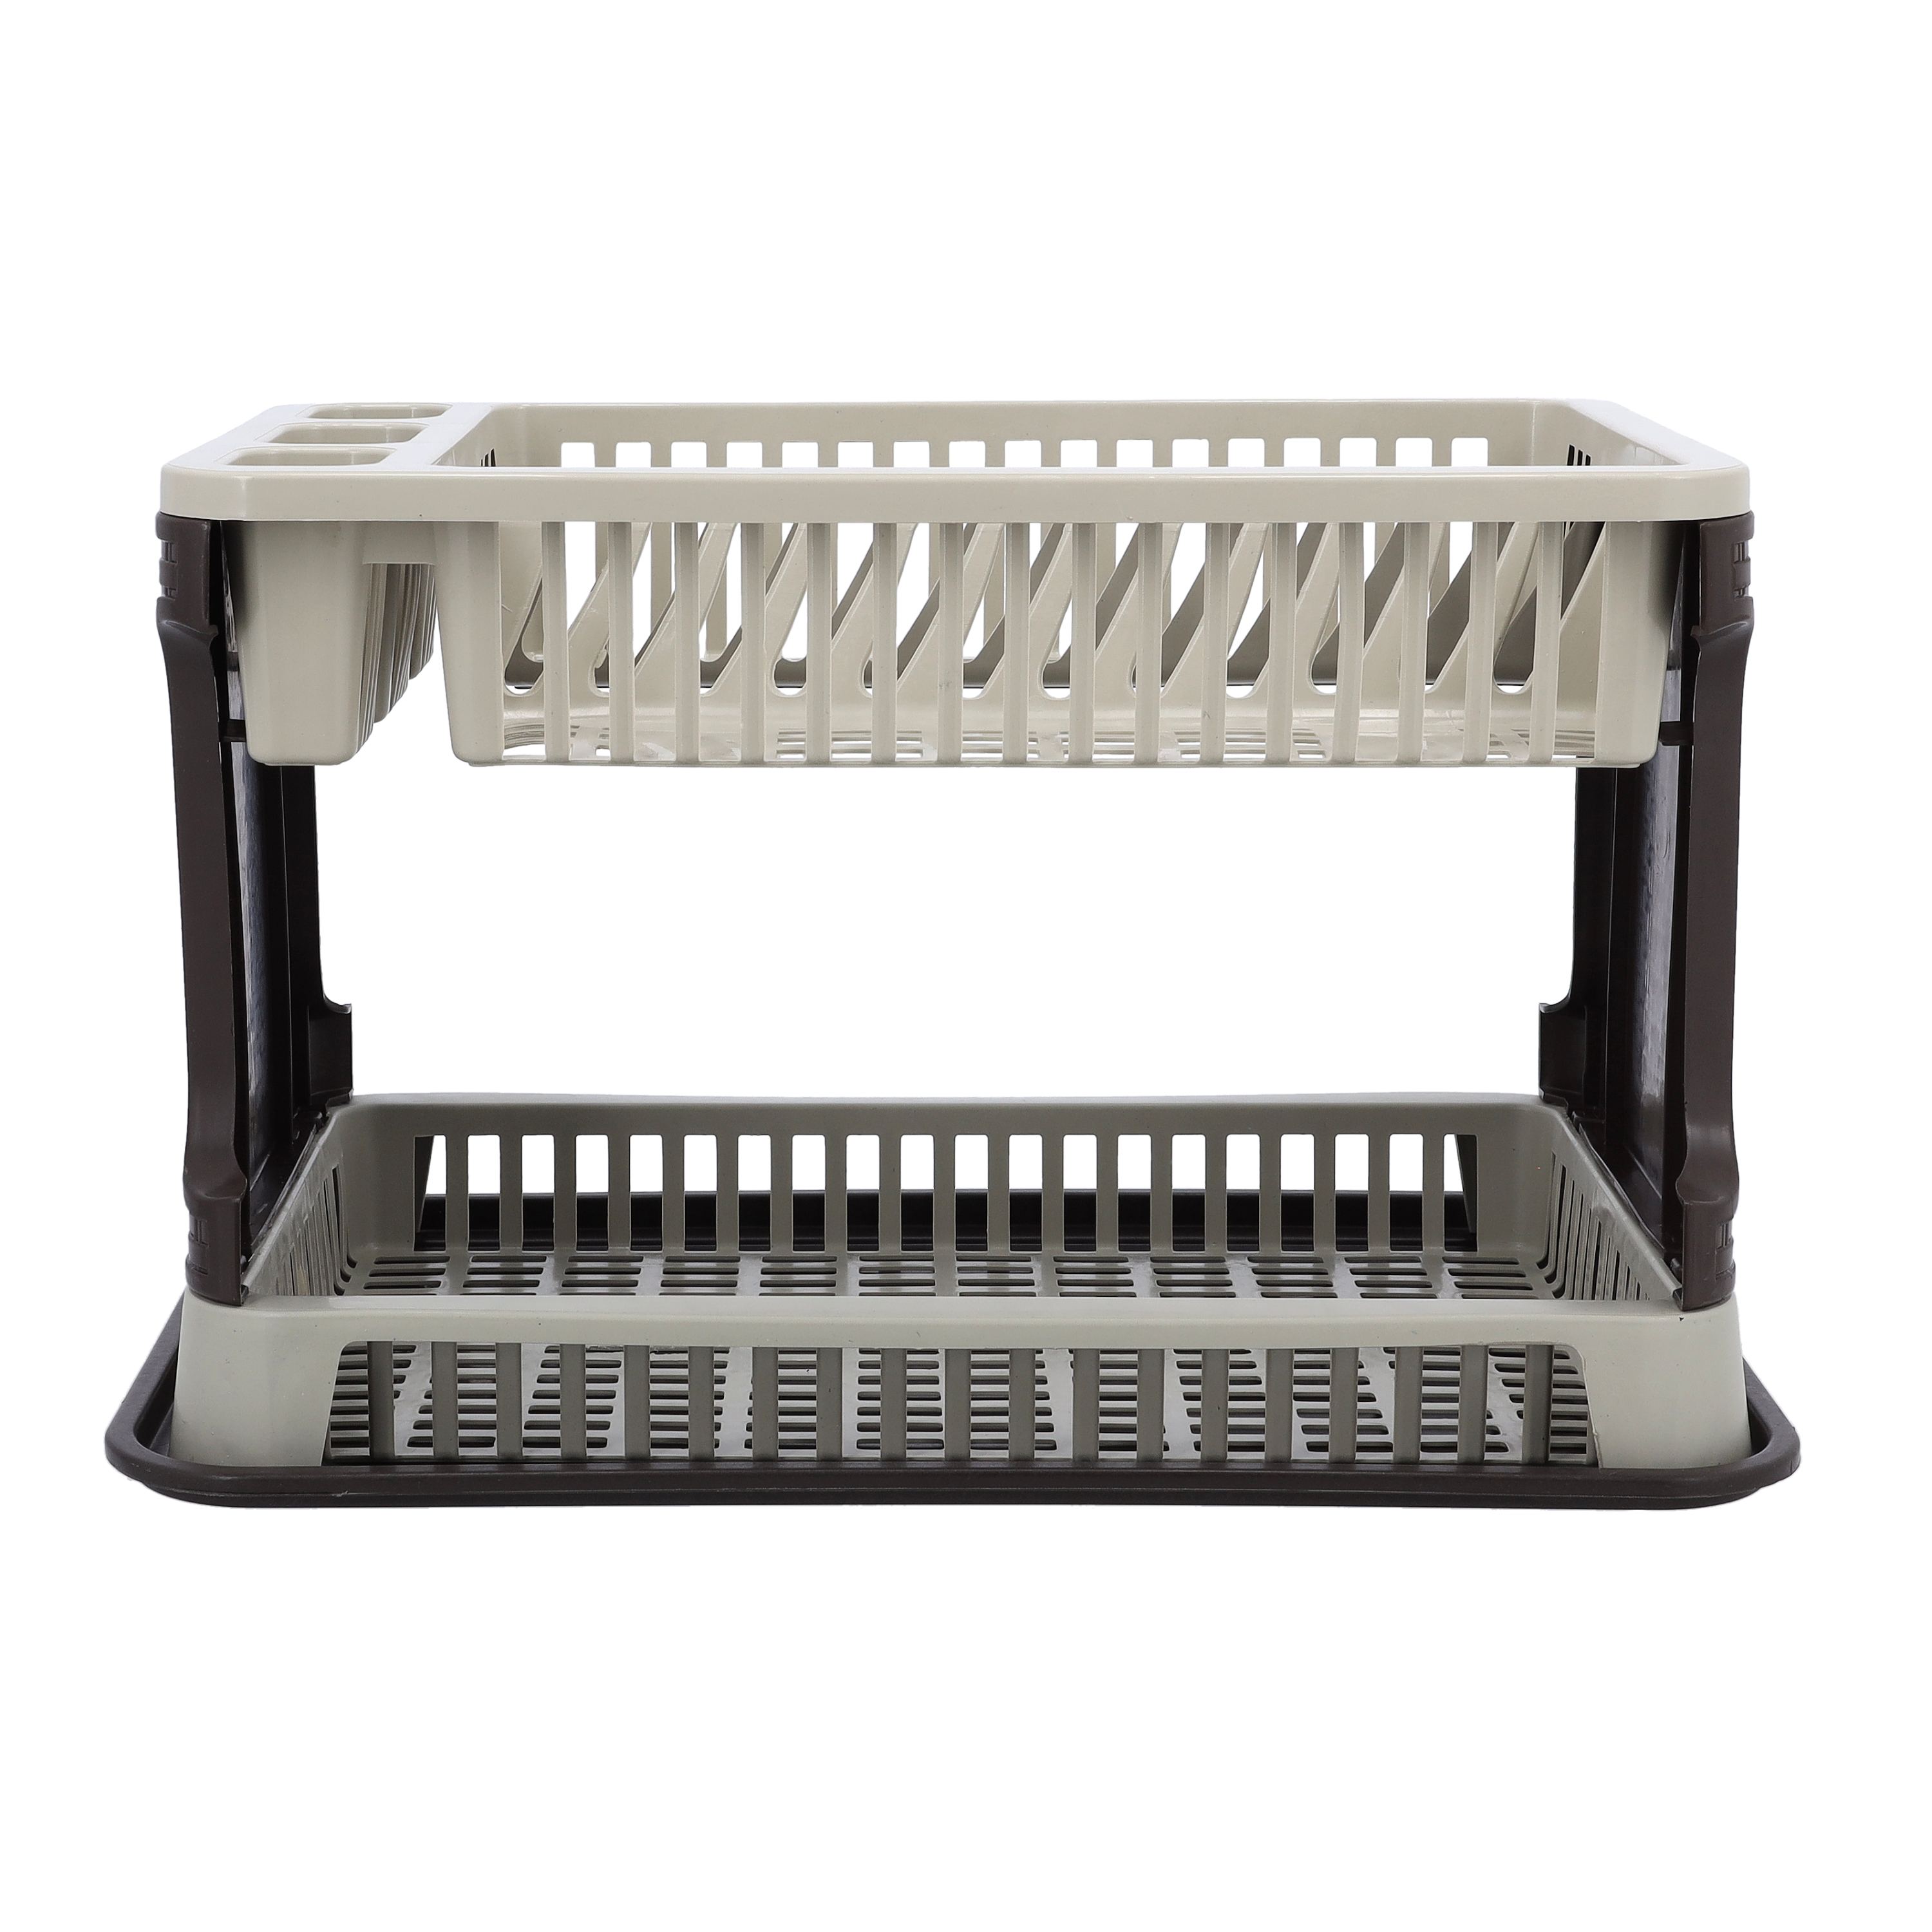 HERJOY Dish Drying Rack, Detachable 2 Tier Dish Rack and Drainboard Set,  Large - Dish Racks, Facebook Marketplace